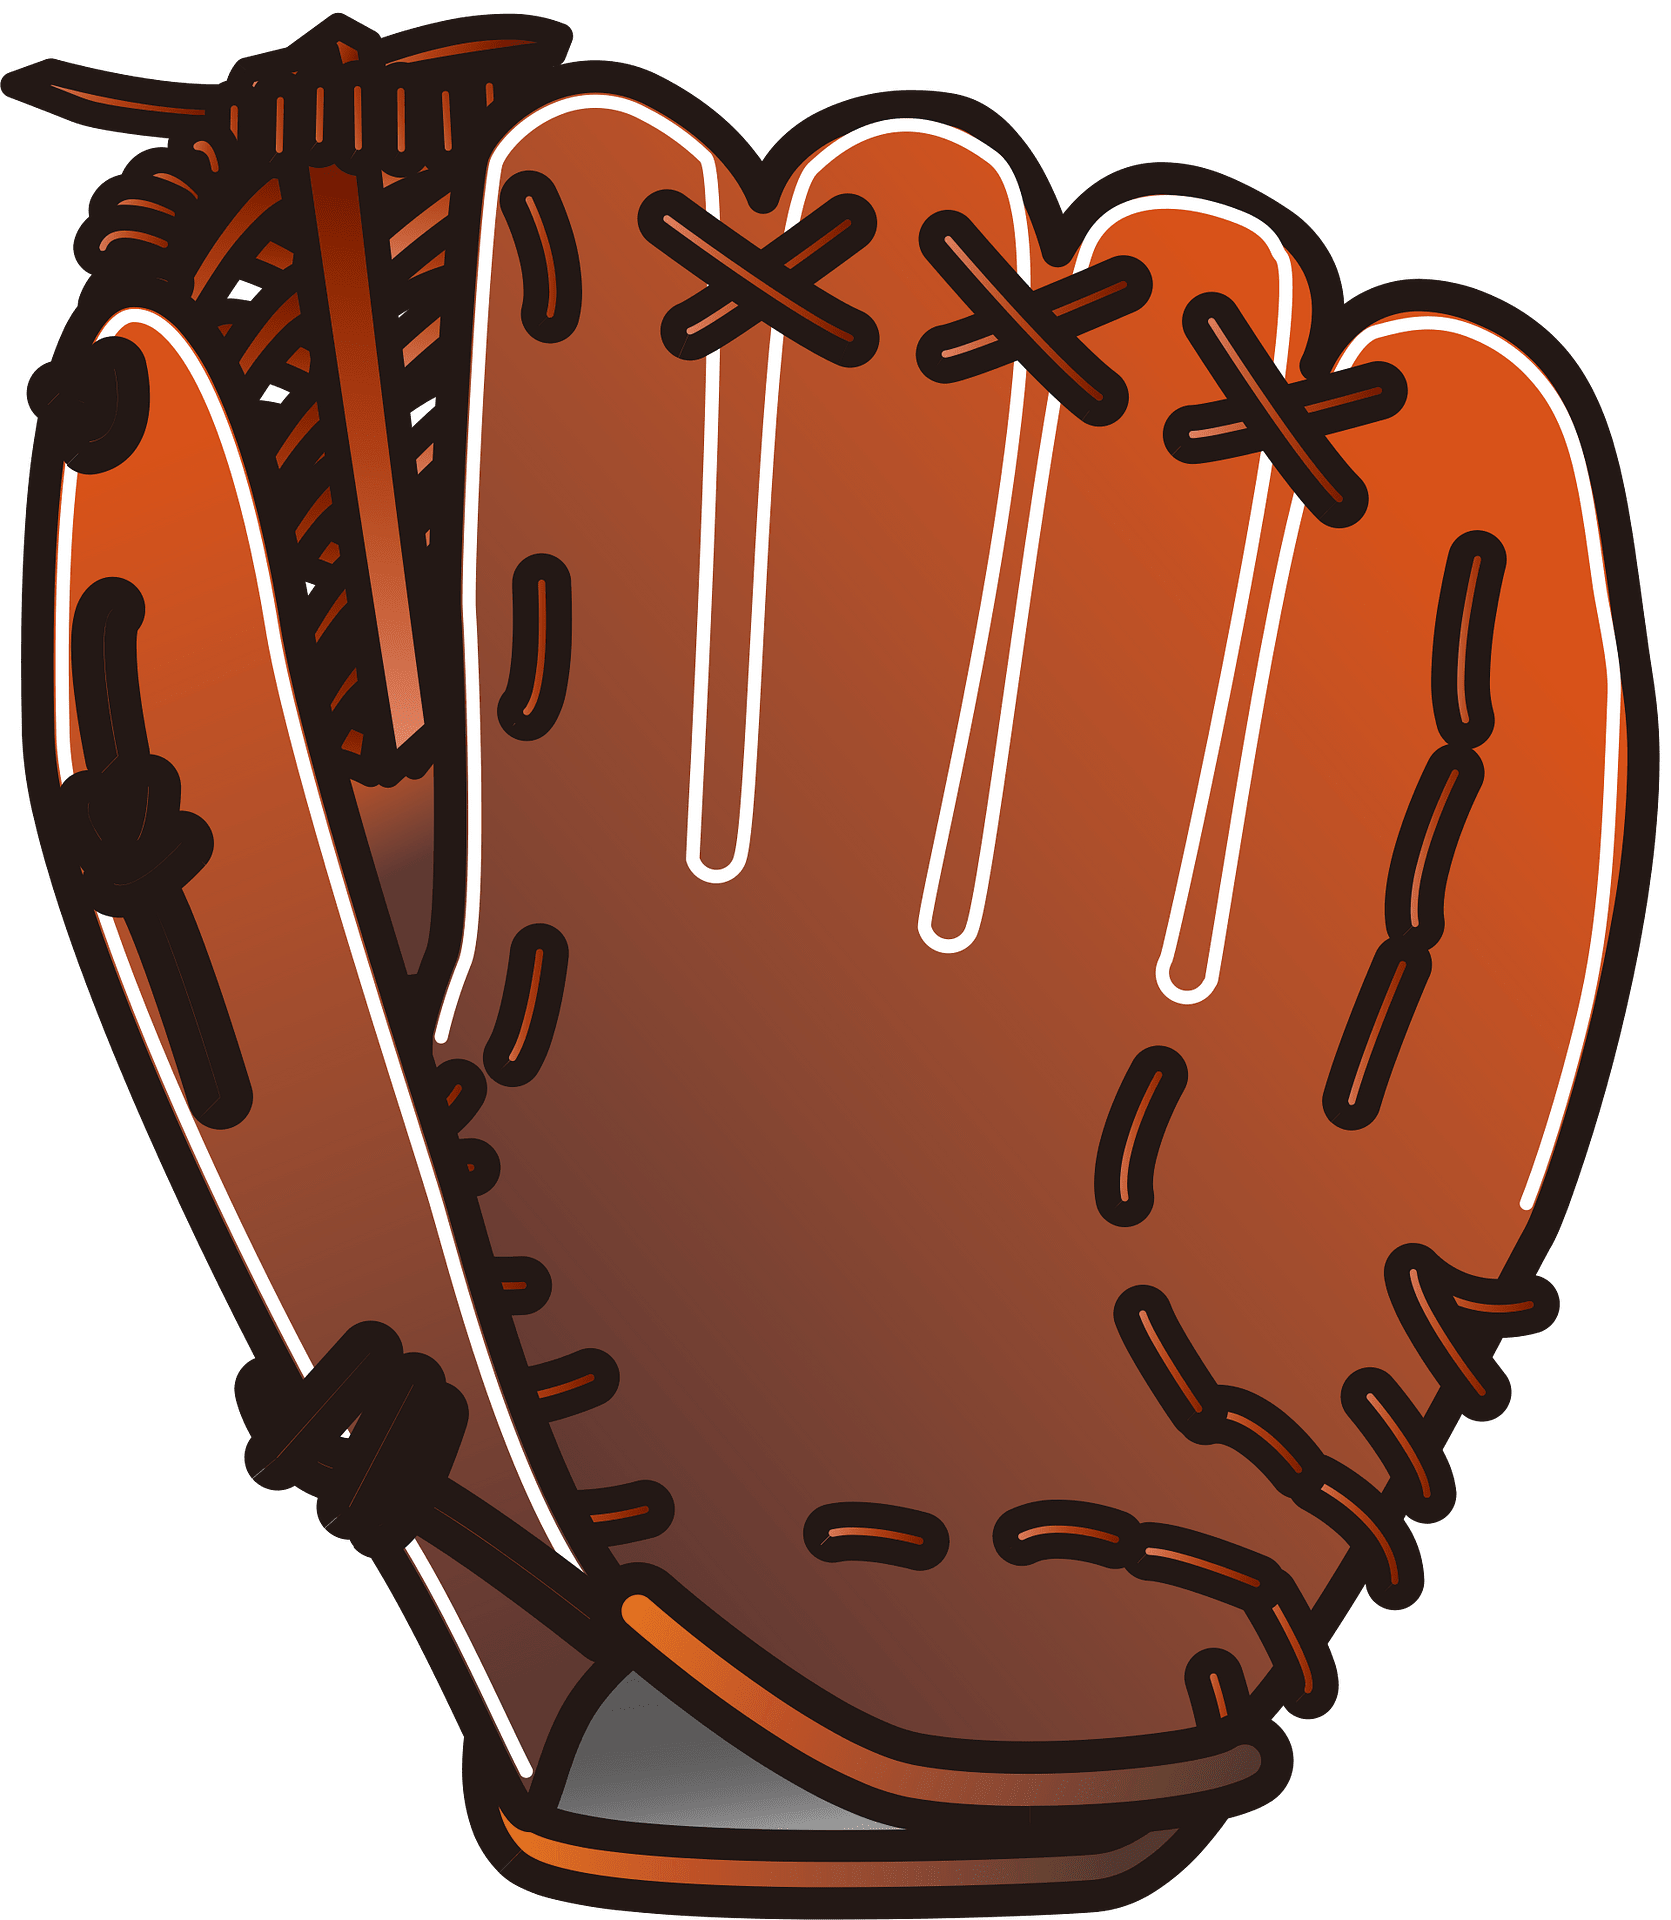 FREE Baseball Glove Clipart Royalty Free Pearly Arts Clip Art Library